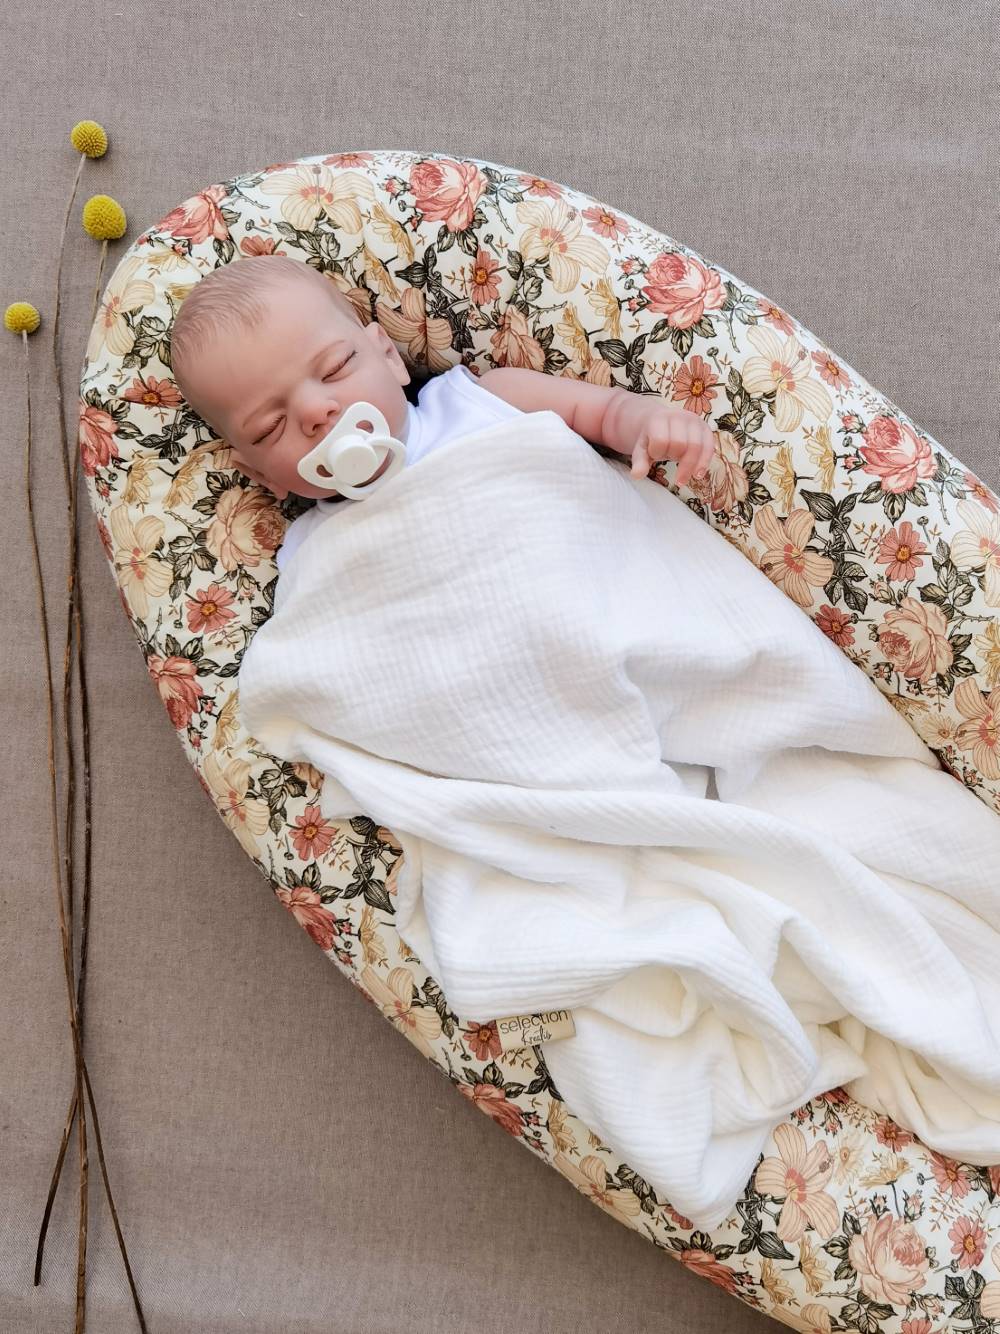 Selectionkreativ - Bettschlange mit Baby im Babycocoon